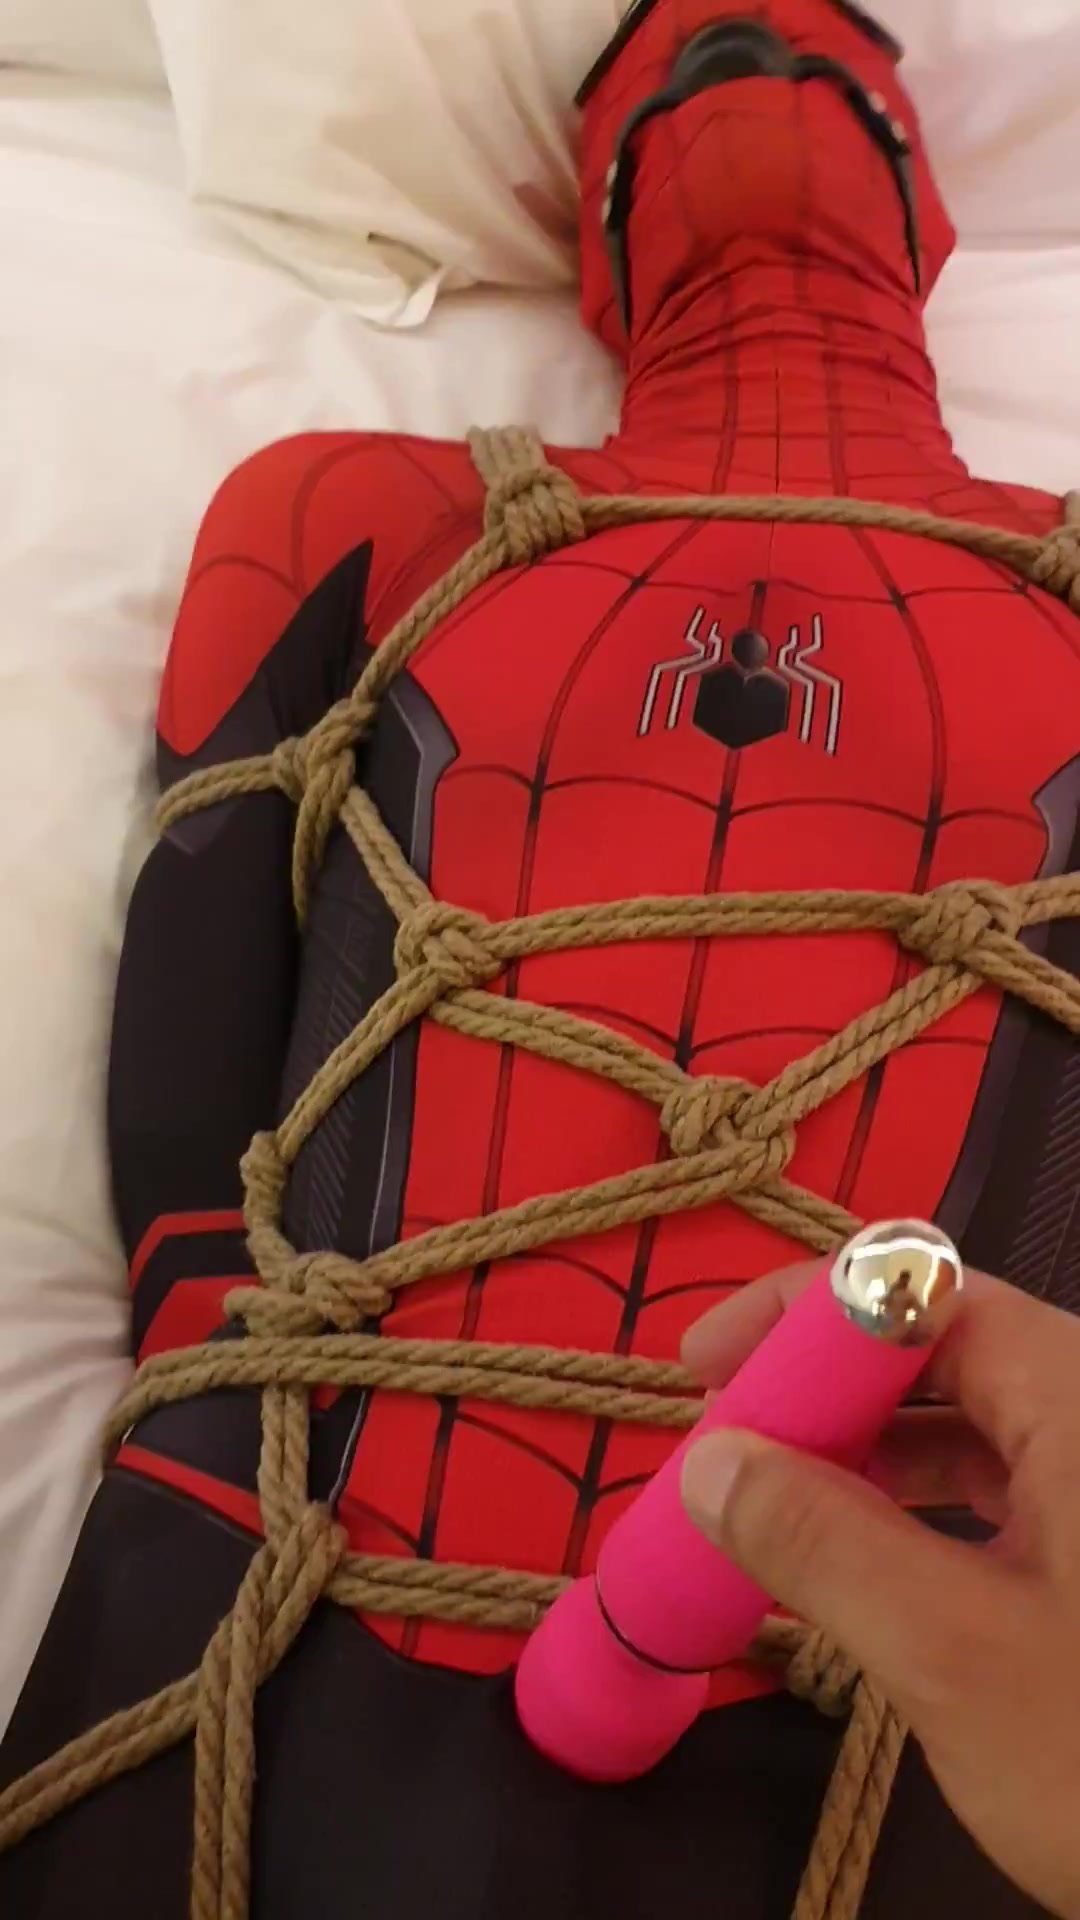 Spider man bondage